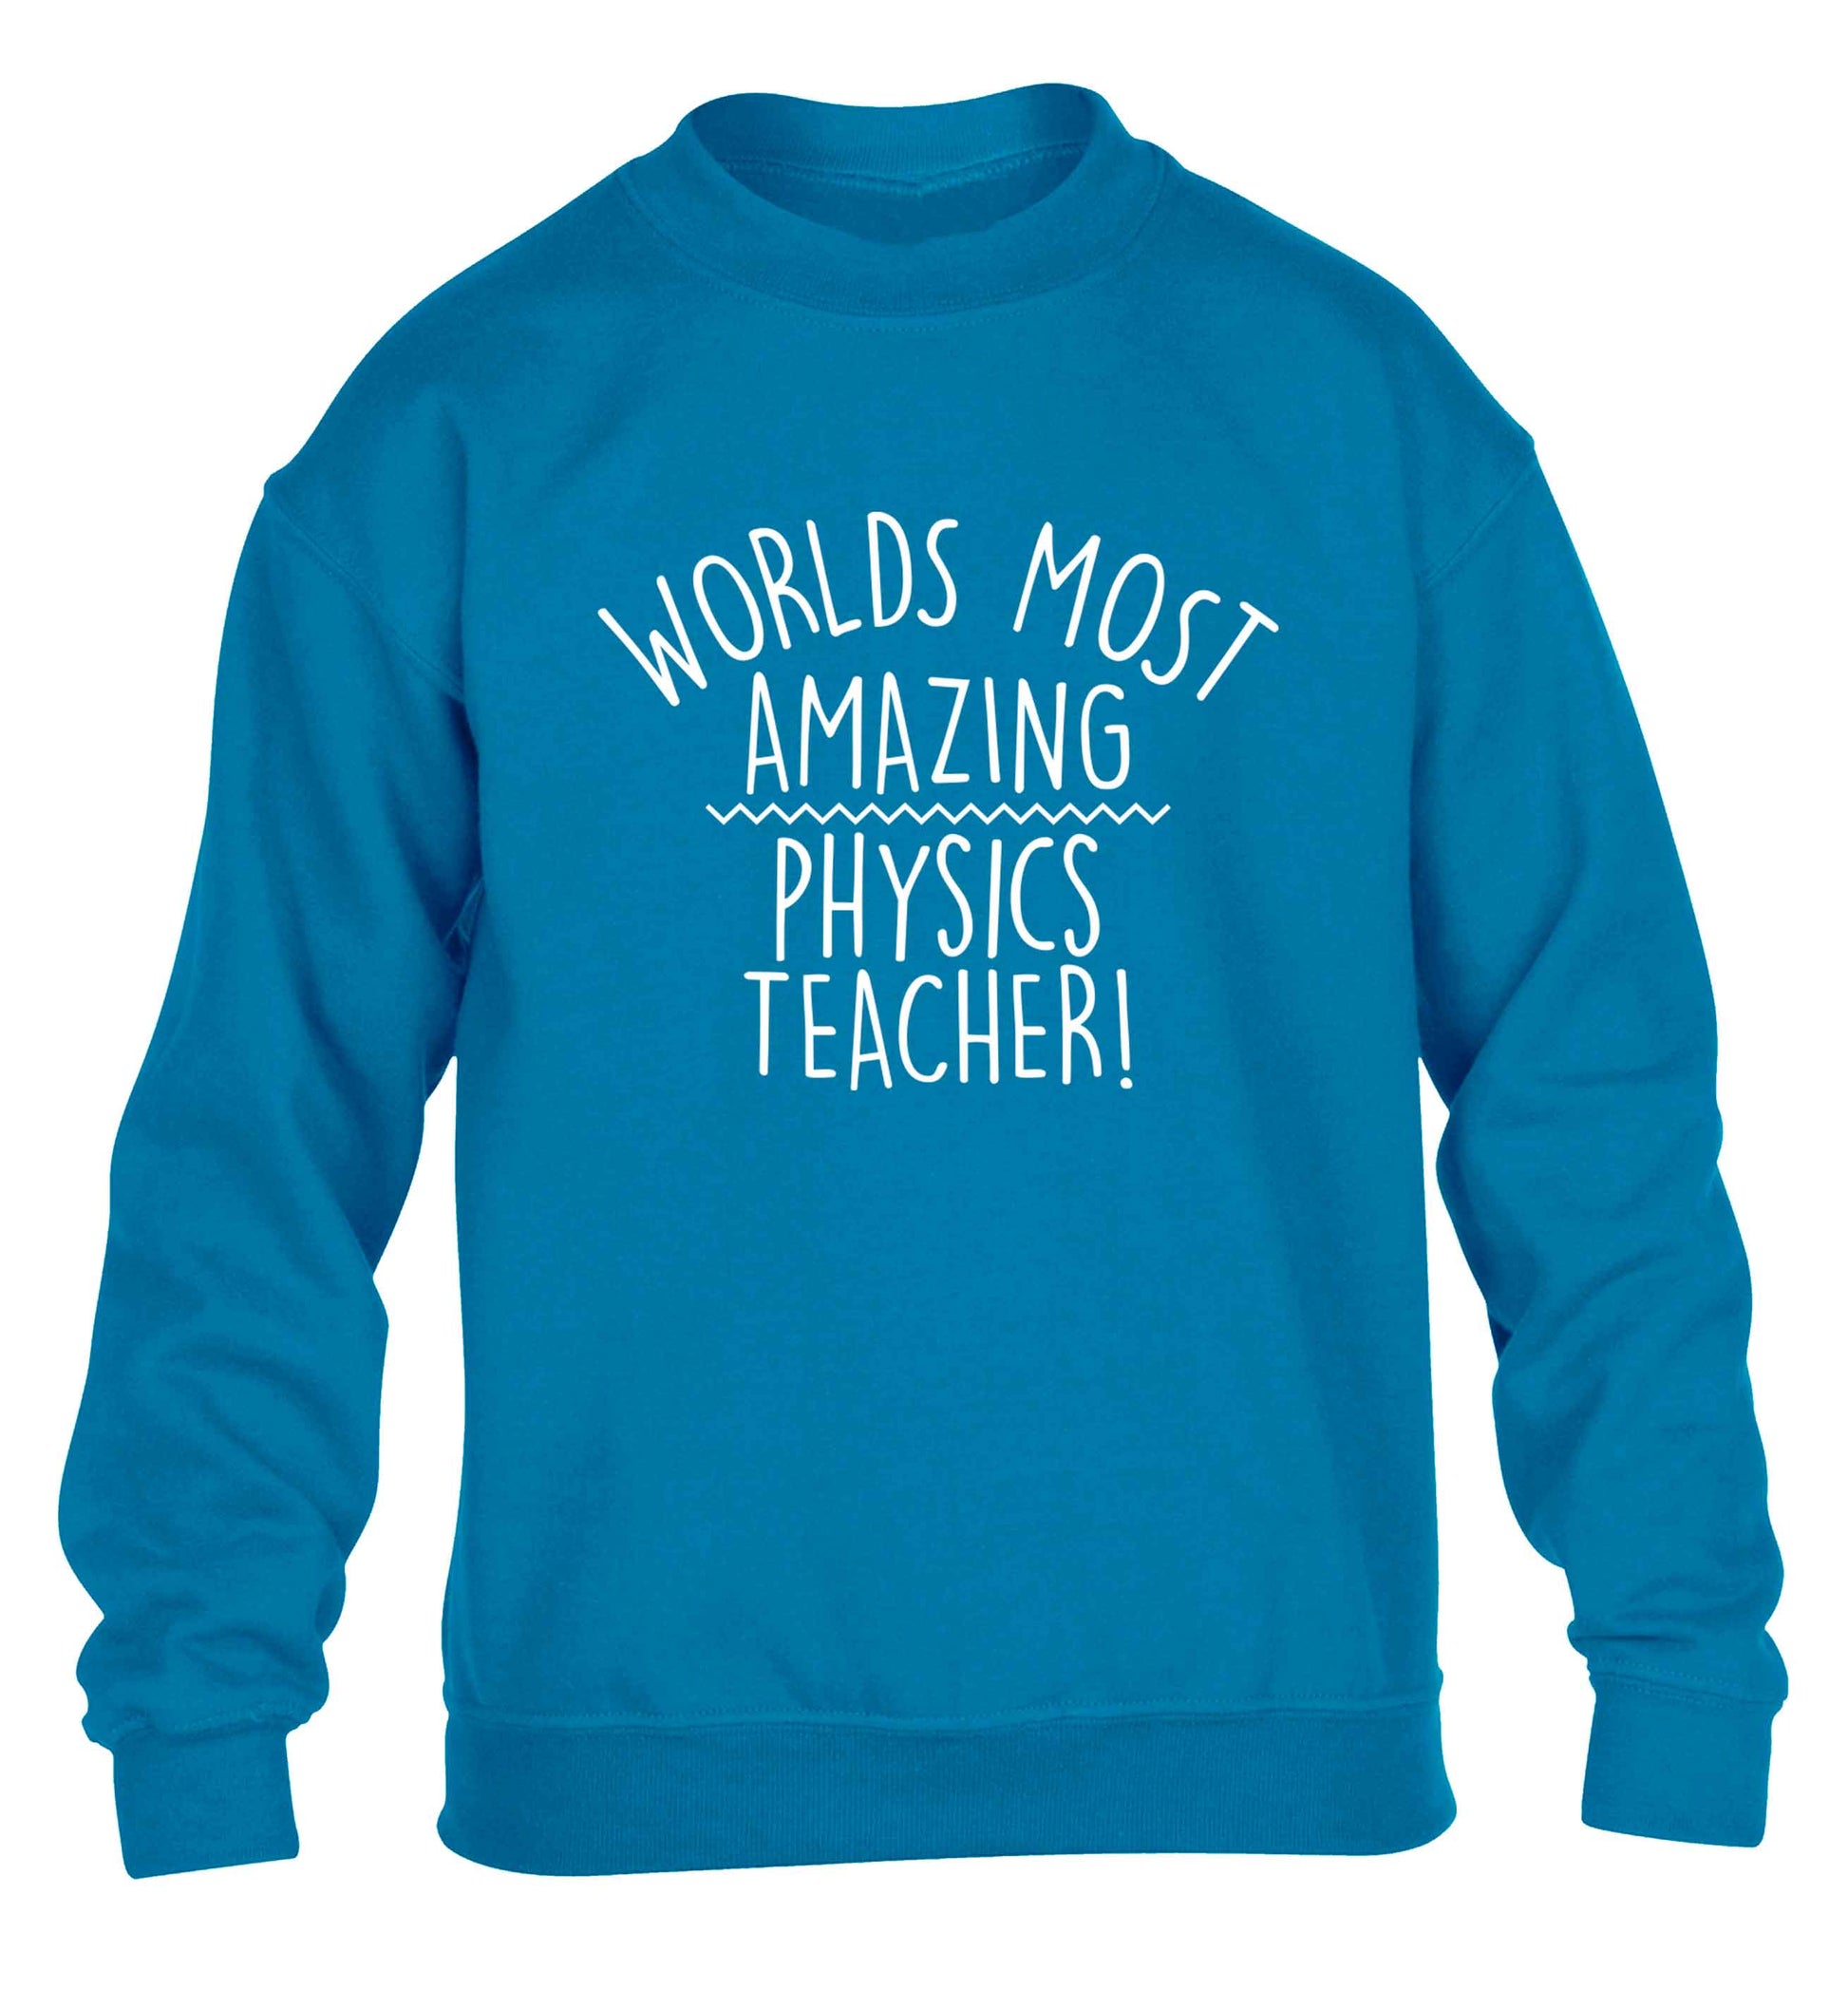 Worlds most amazing physics teacher children's blue sweater 12-13 Years